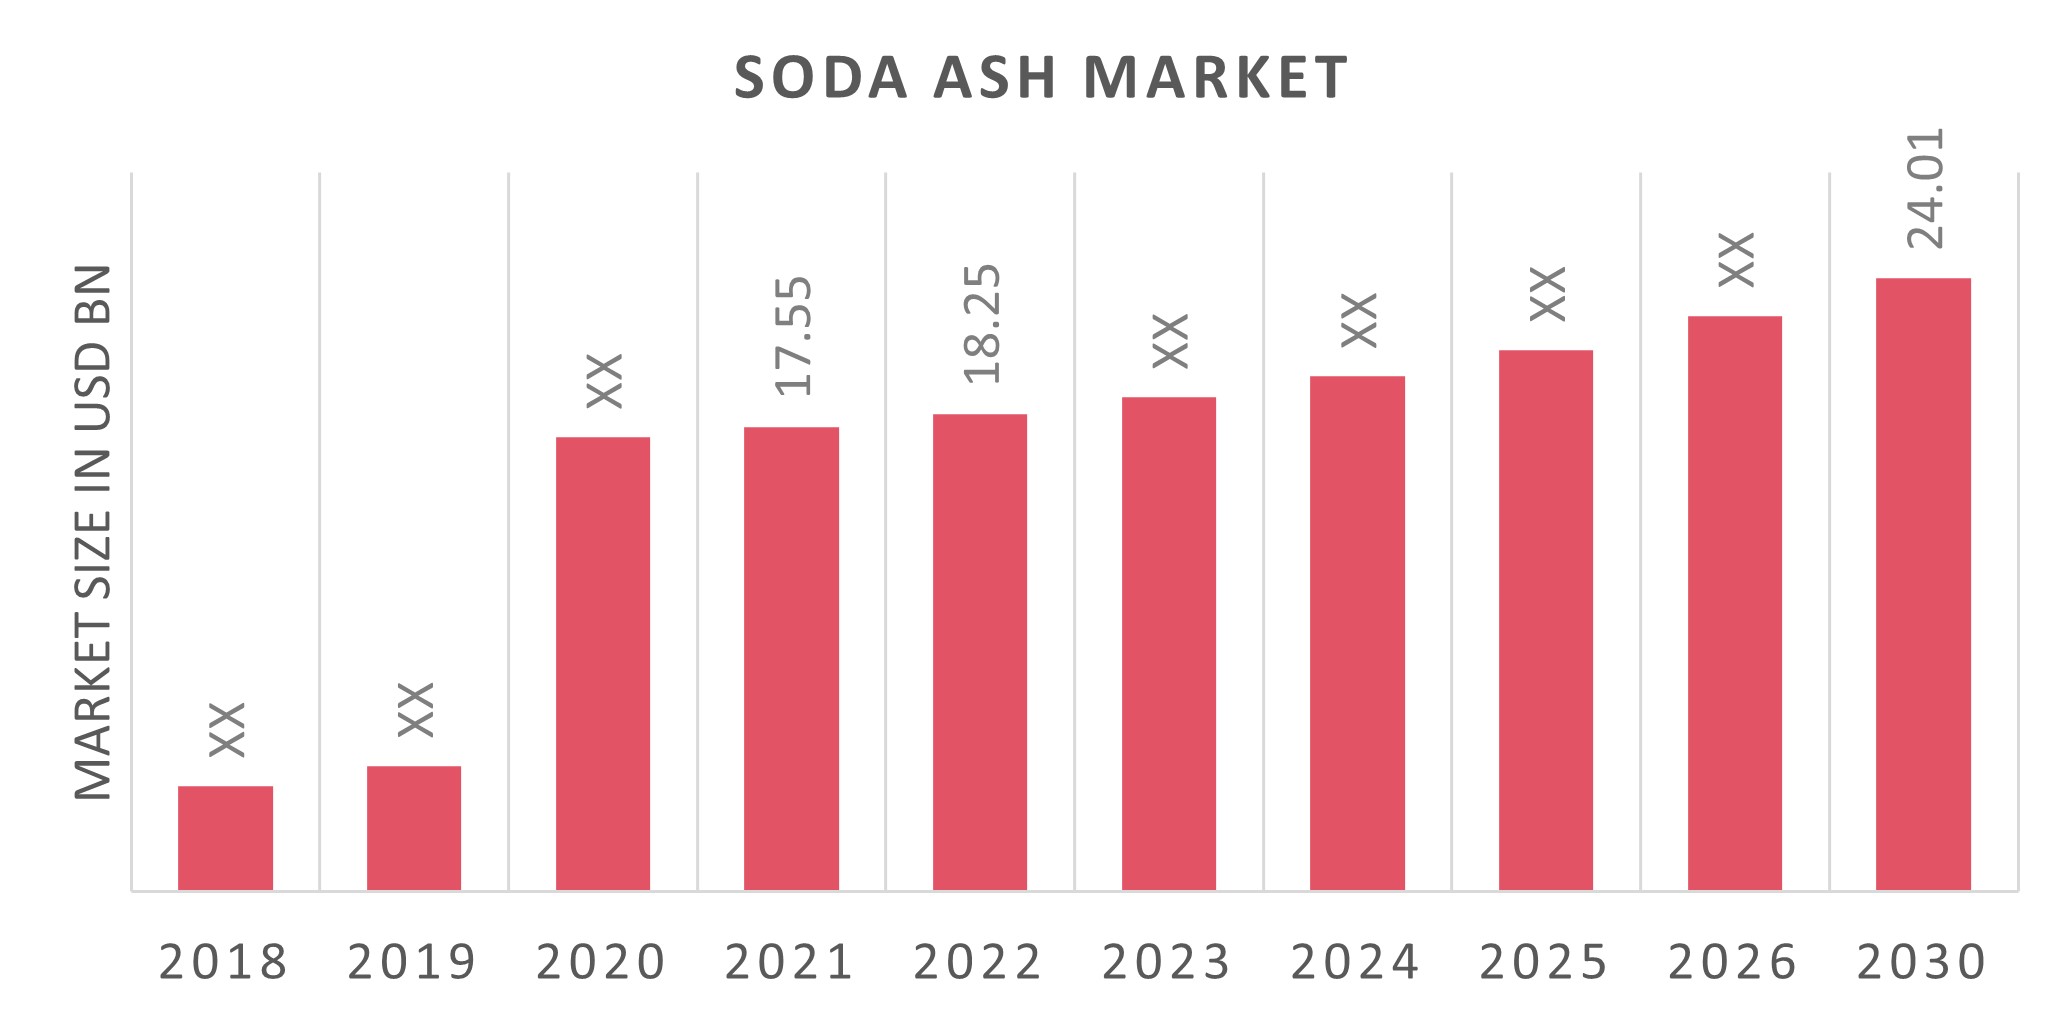 Soda Ash Market Size, Share & Forecast Report, 2030